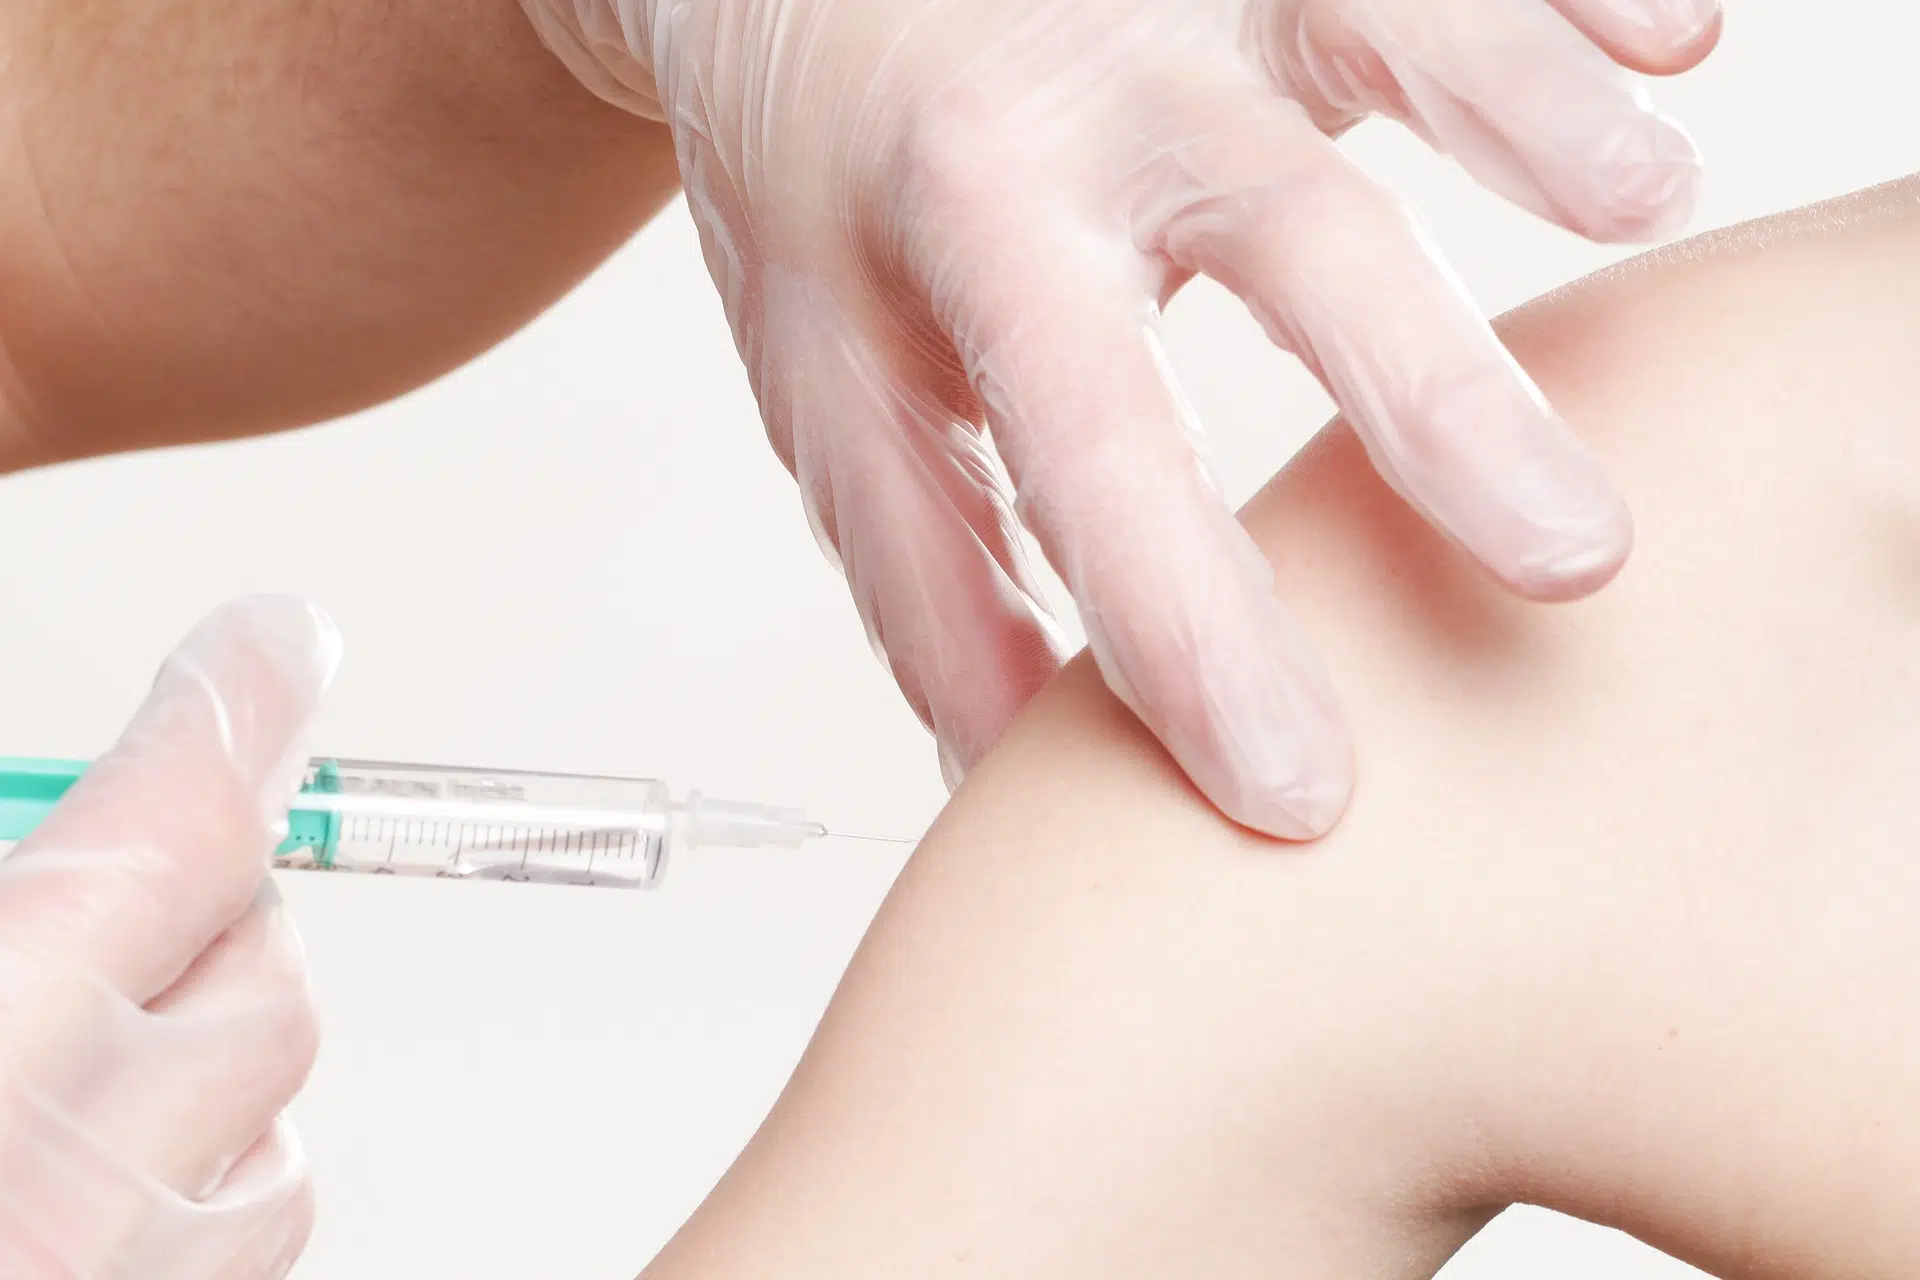 SHA, pharmacies set to start administering flu shots